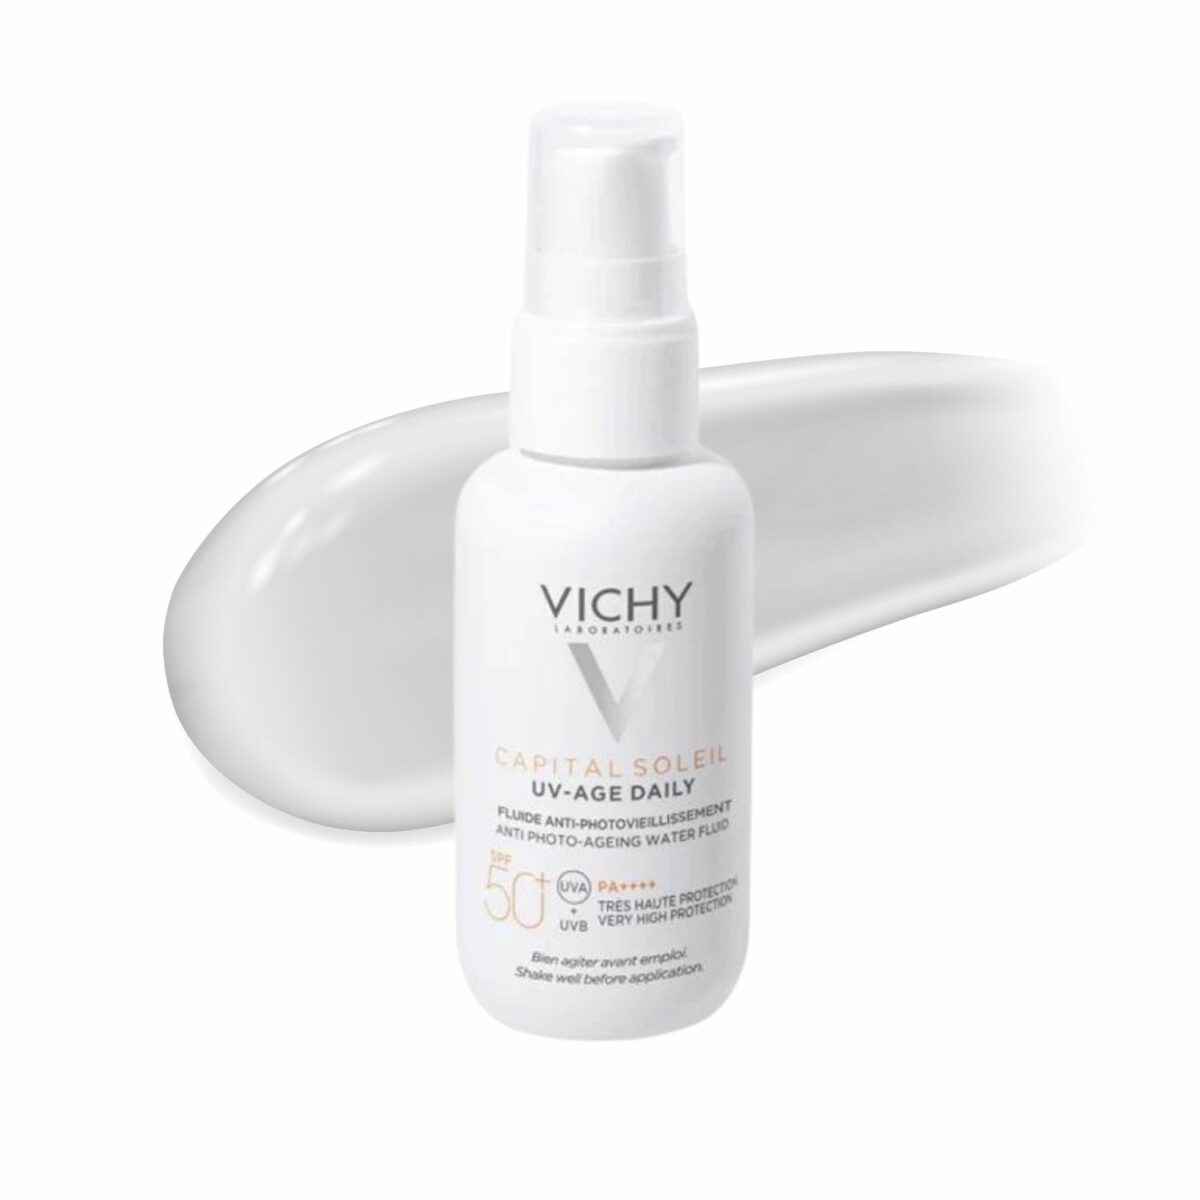 Vichy Capital Solil UV Dayli 50+ 40ml + 89 Mineral booster 30ml promo set